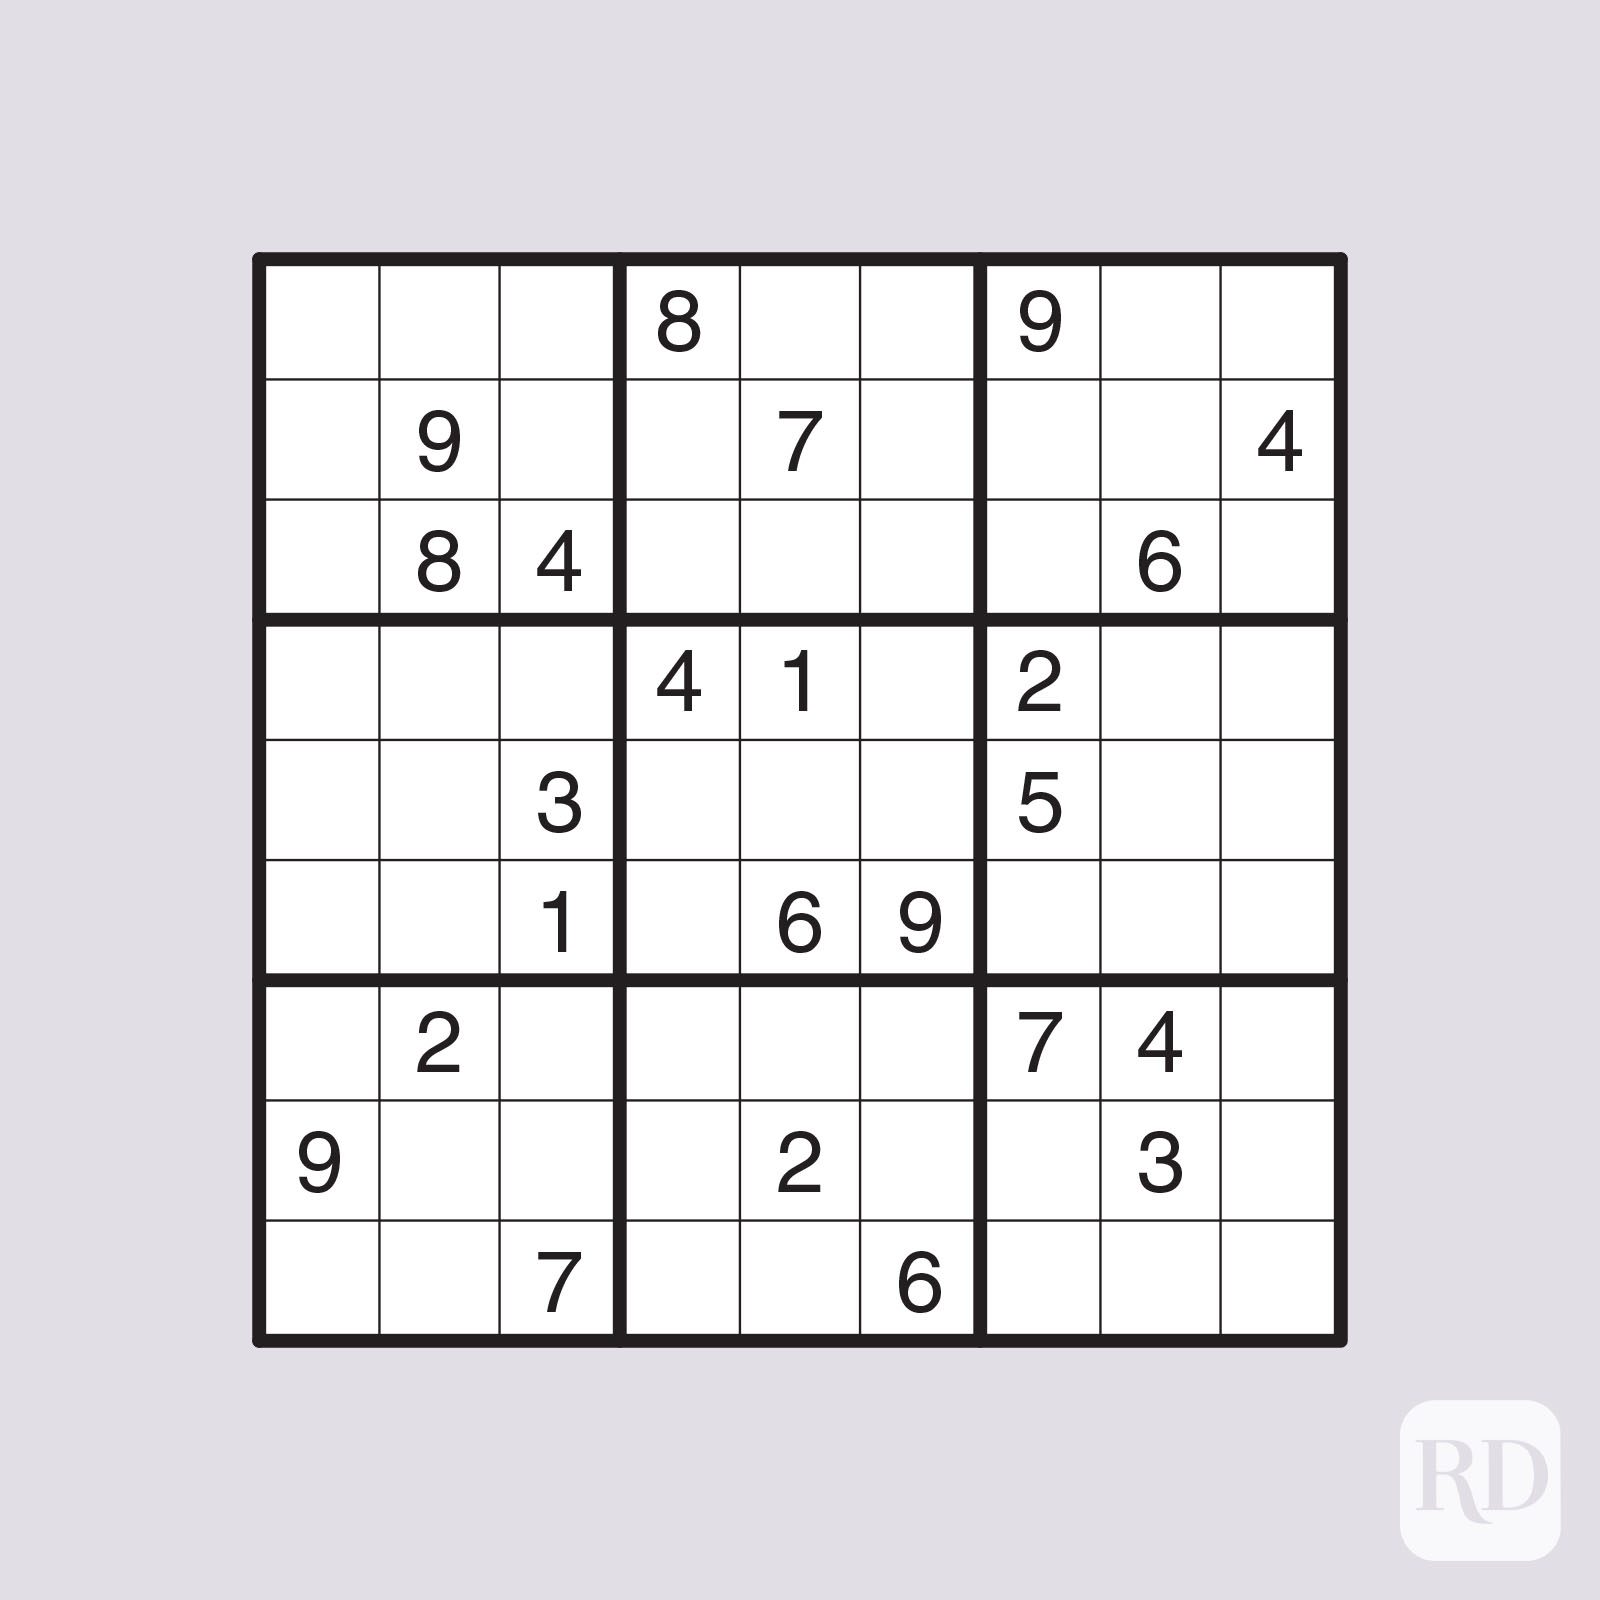 Hard Sudoku Puzzles Printable